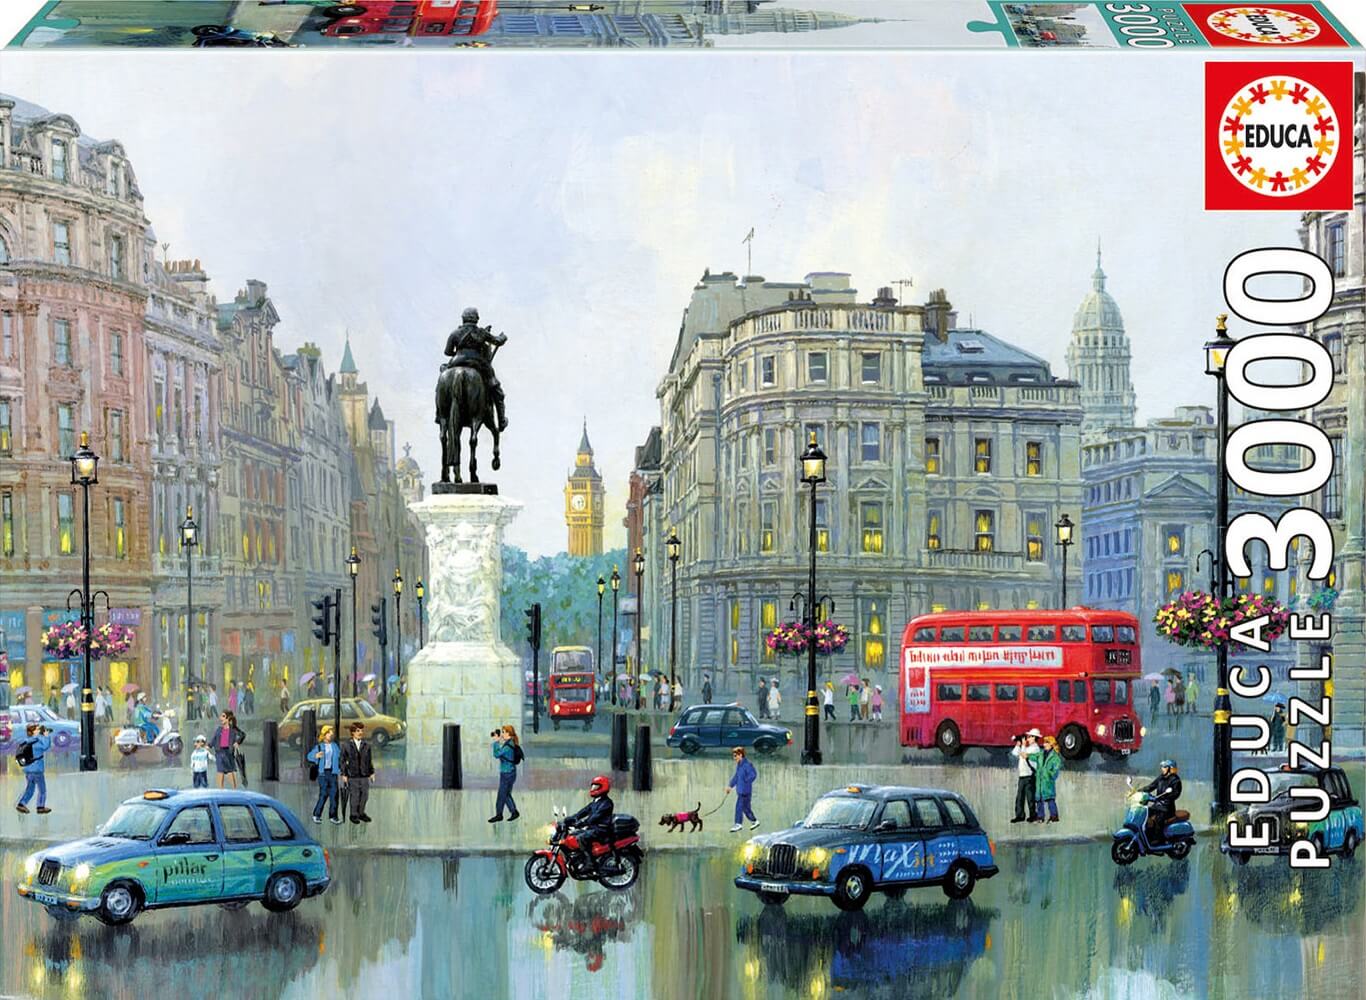 3000 London Charing Cross, Alexander Chen